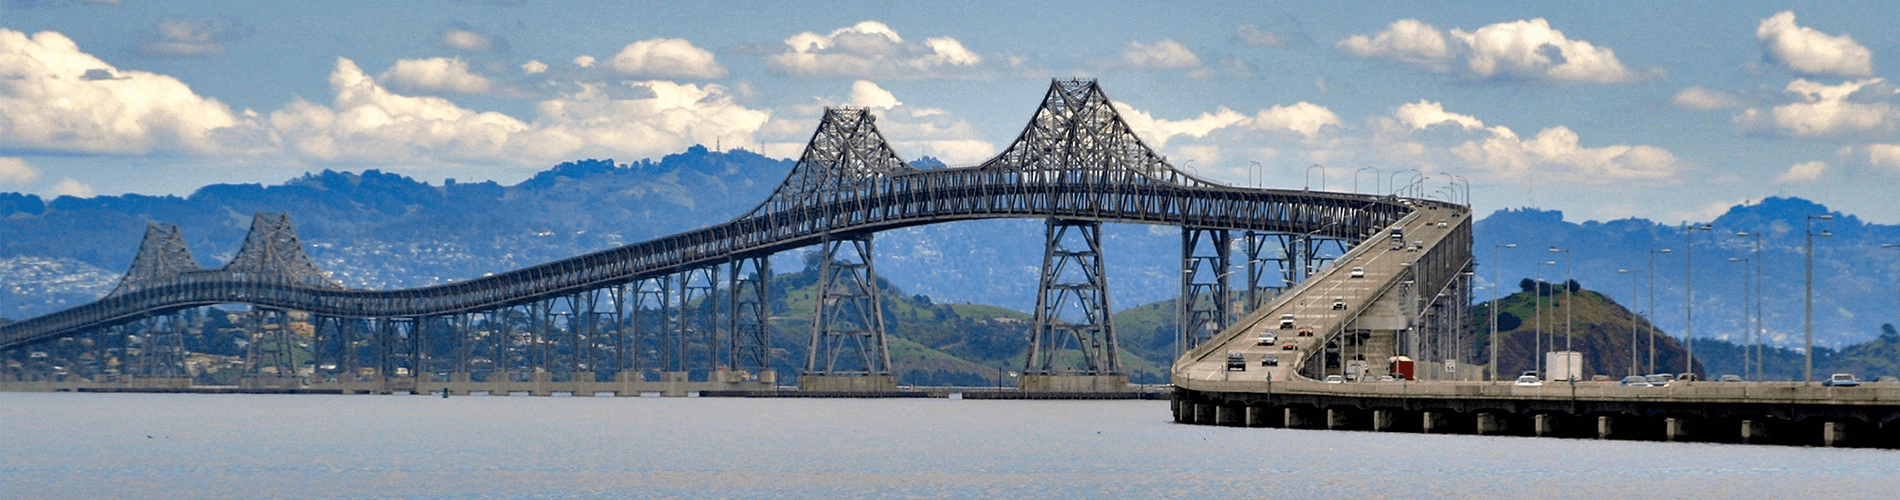 Puente-san-rafael-California